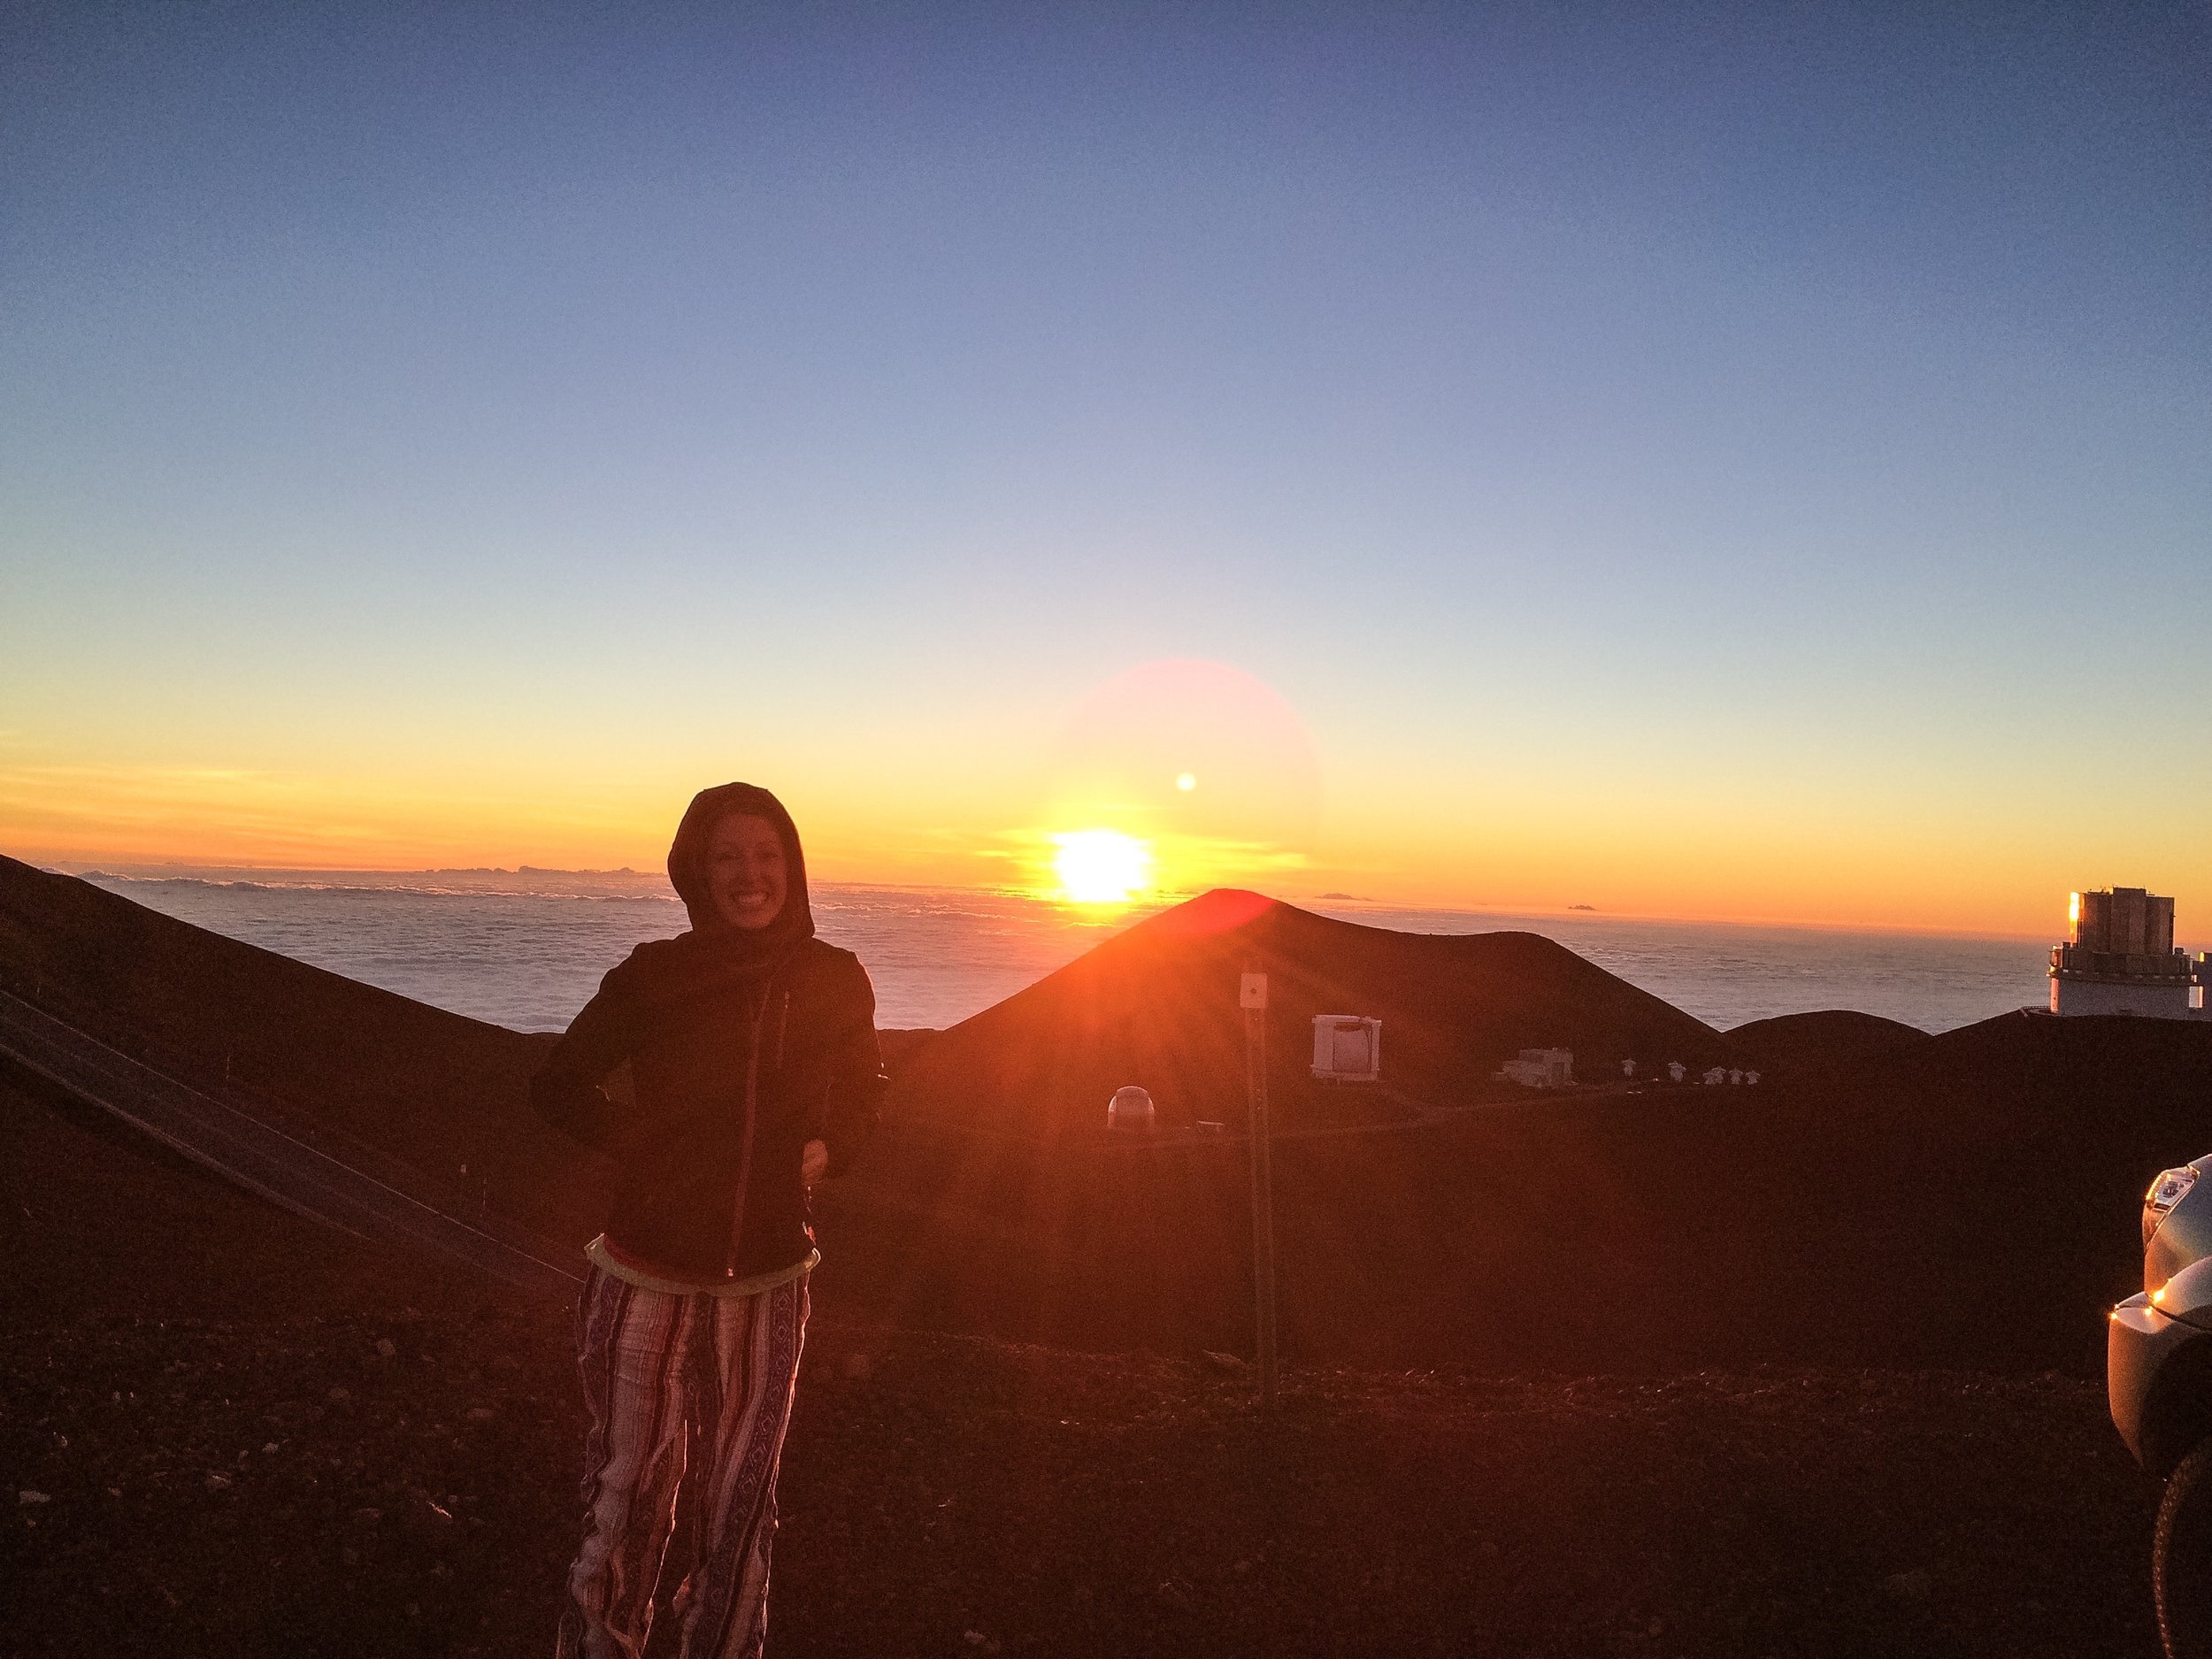  Sunset at 14,000 feet atop Mauna Kea in Hawaii 